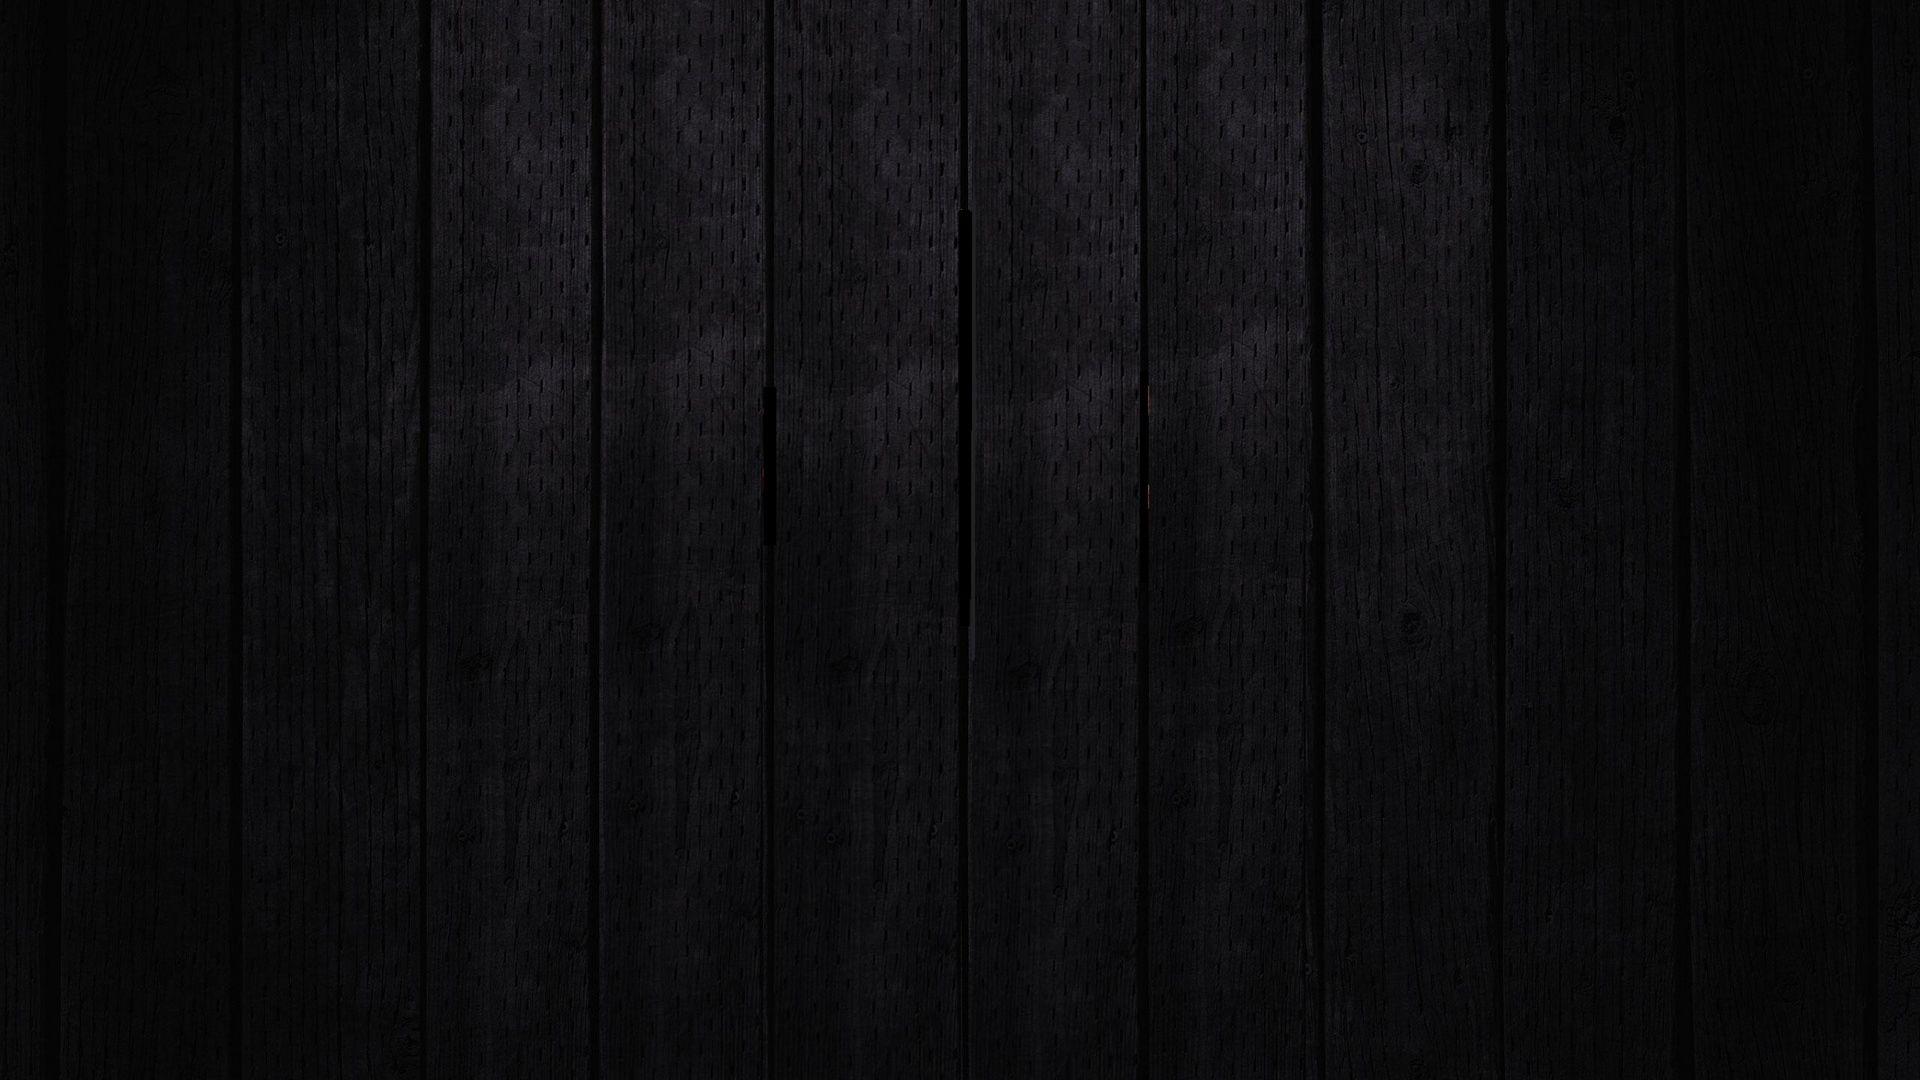 Download wallpaper 1920x1080 black, dark, shadow full hd, hdtv, fhd, 1080p HD background